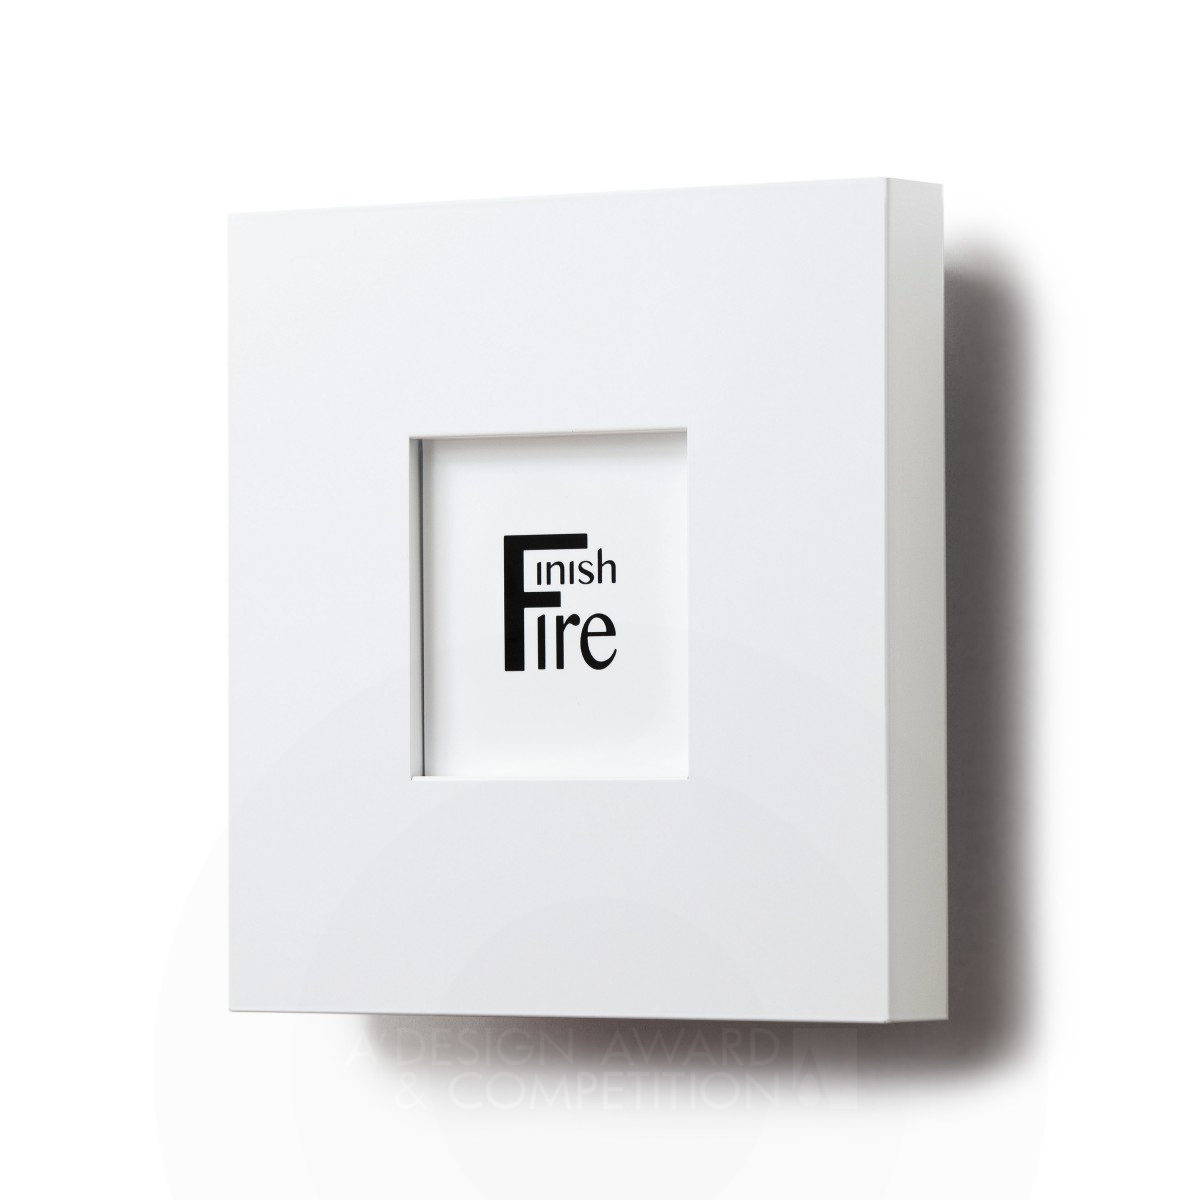 Finishfire Frame covers extinguishing equipment by Sanna Liimatainen